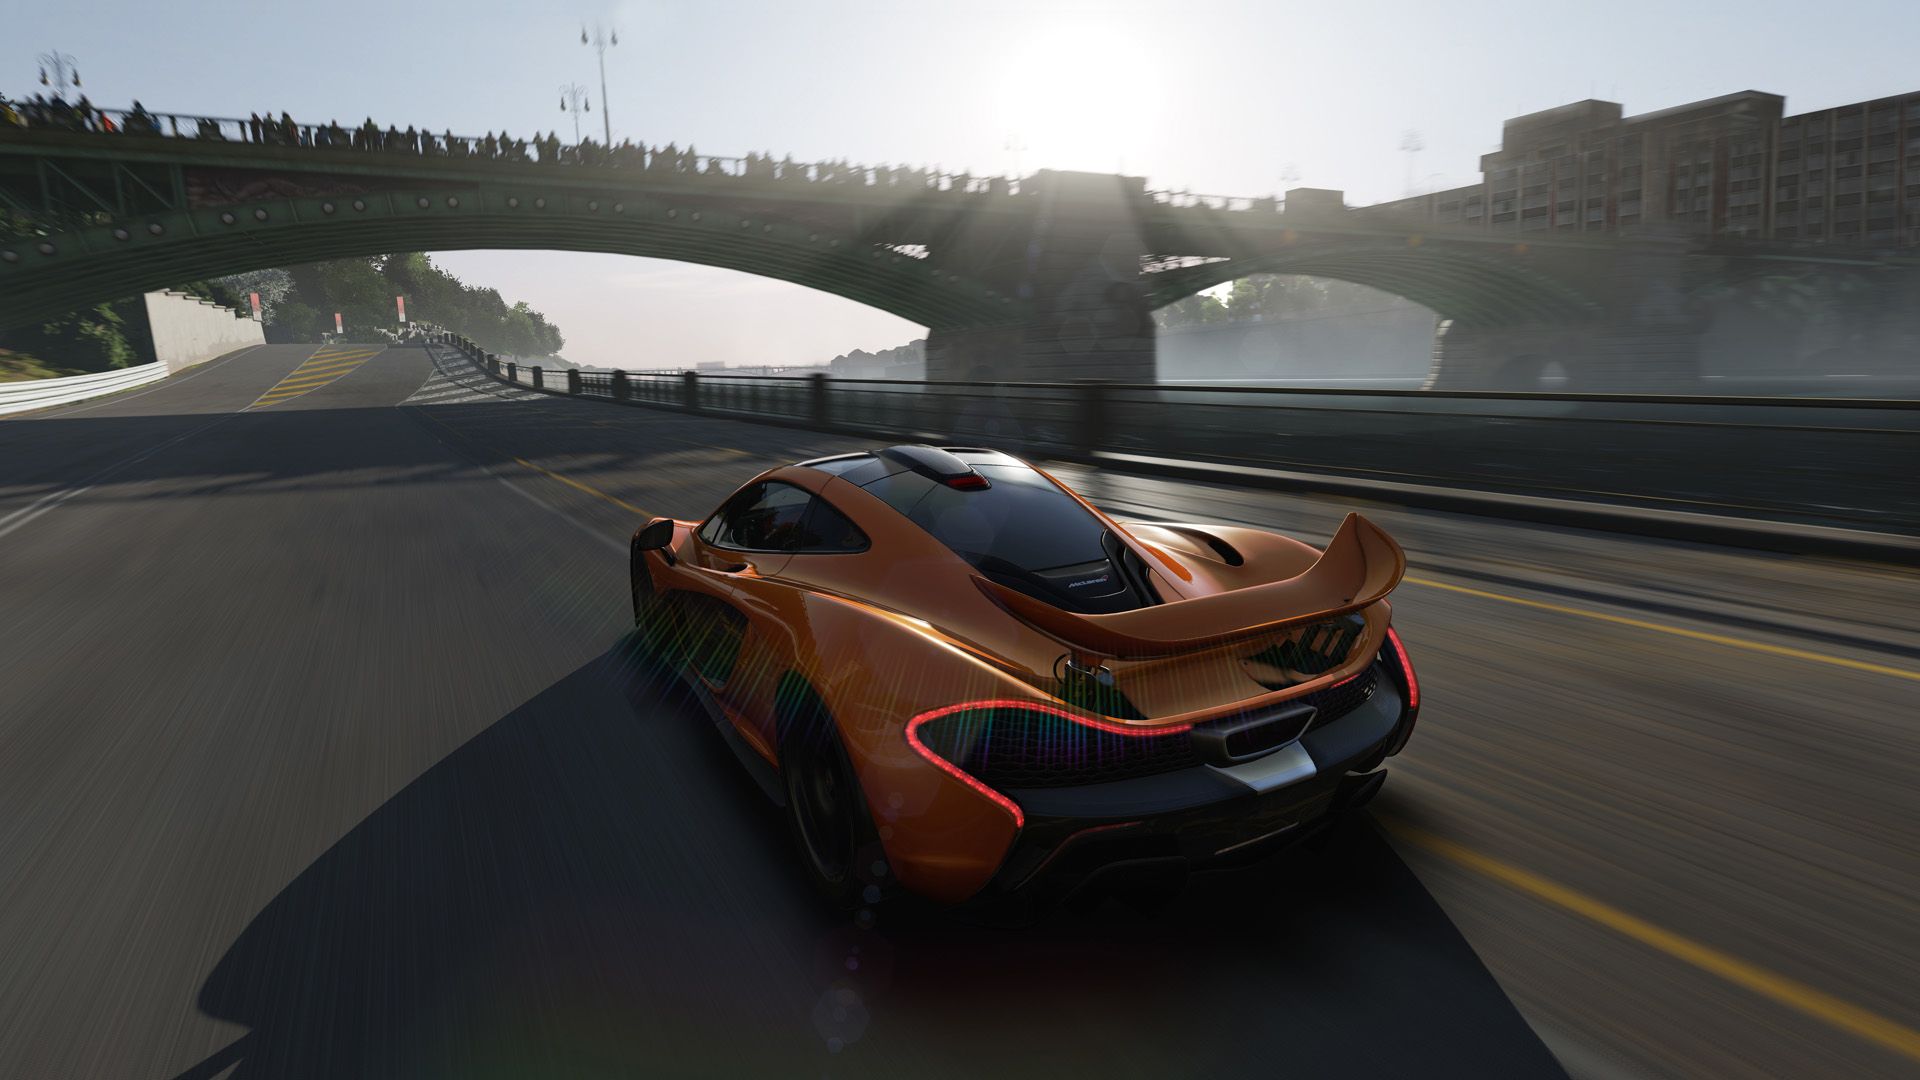 Forza Motorsport 5 - 1